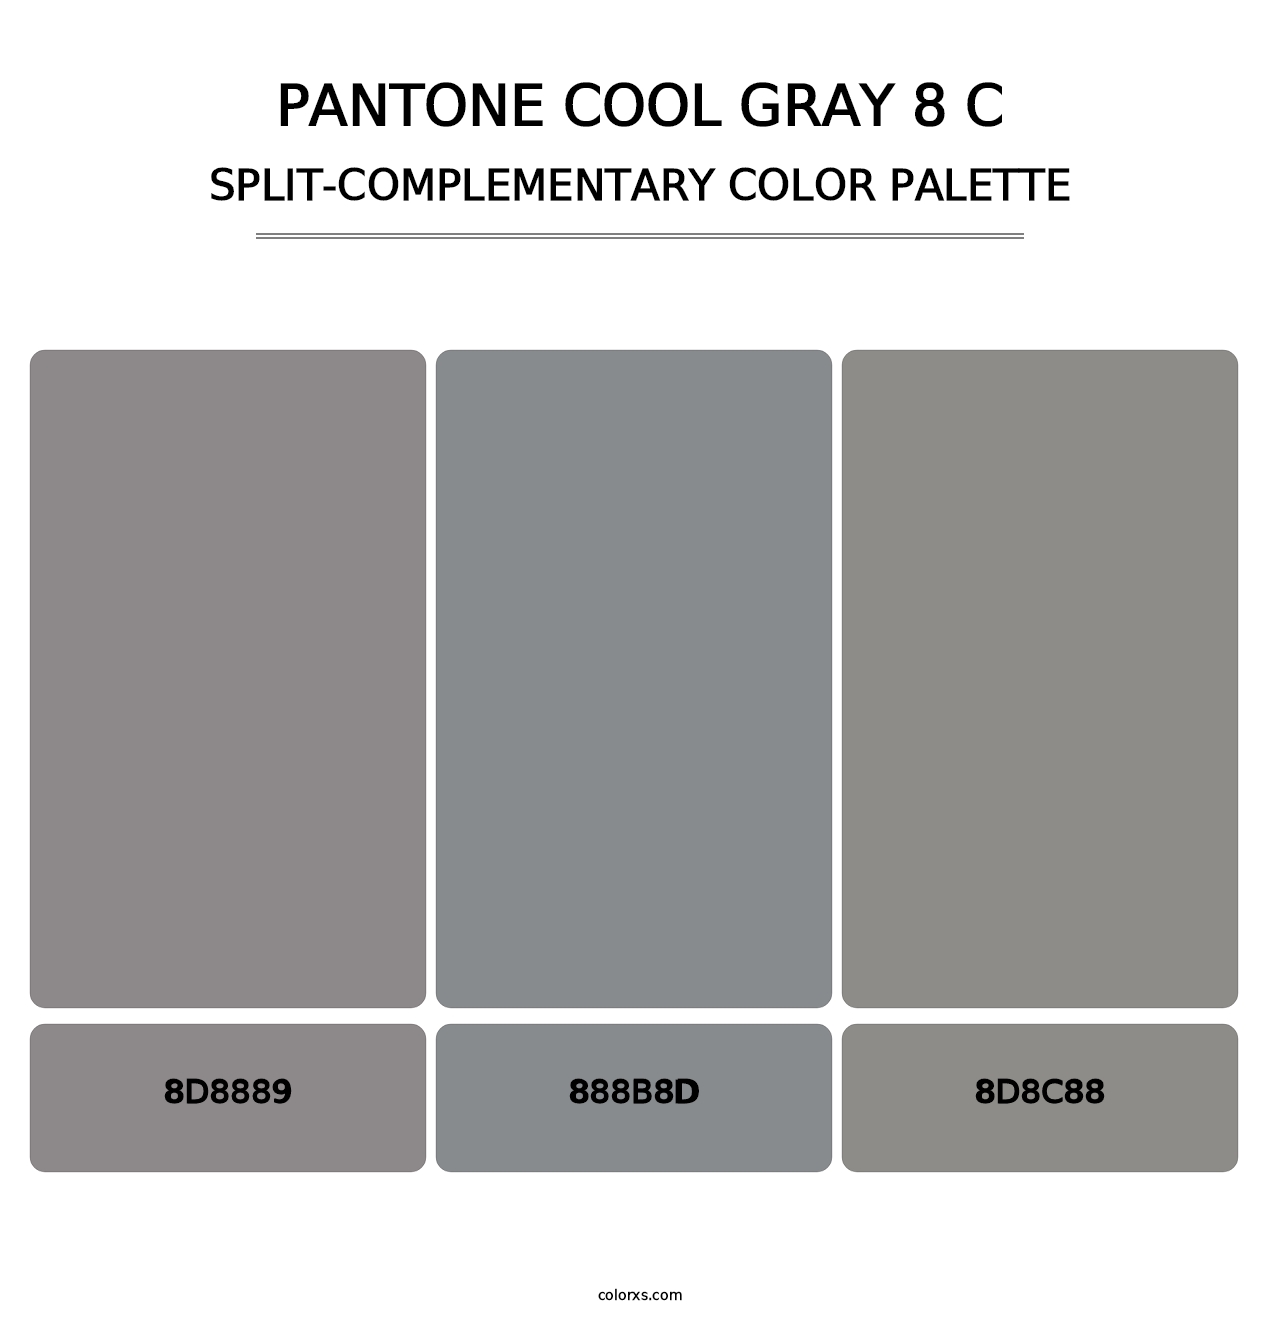 PANTONE Cool Gray 8 C - Split-Complementary Color Palette